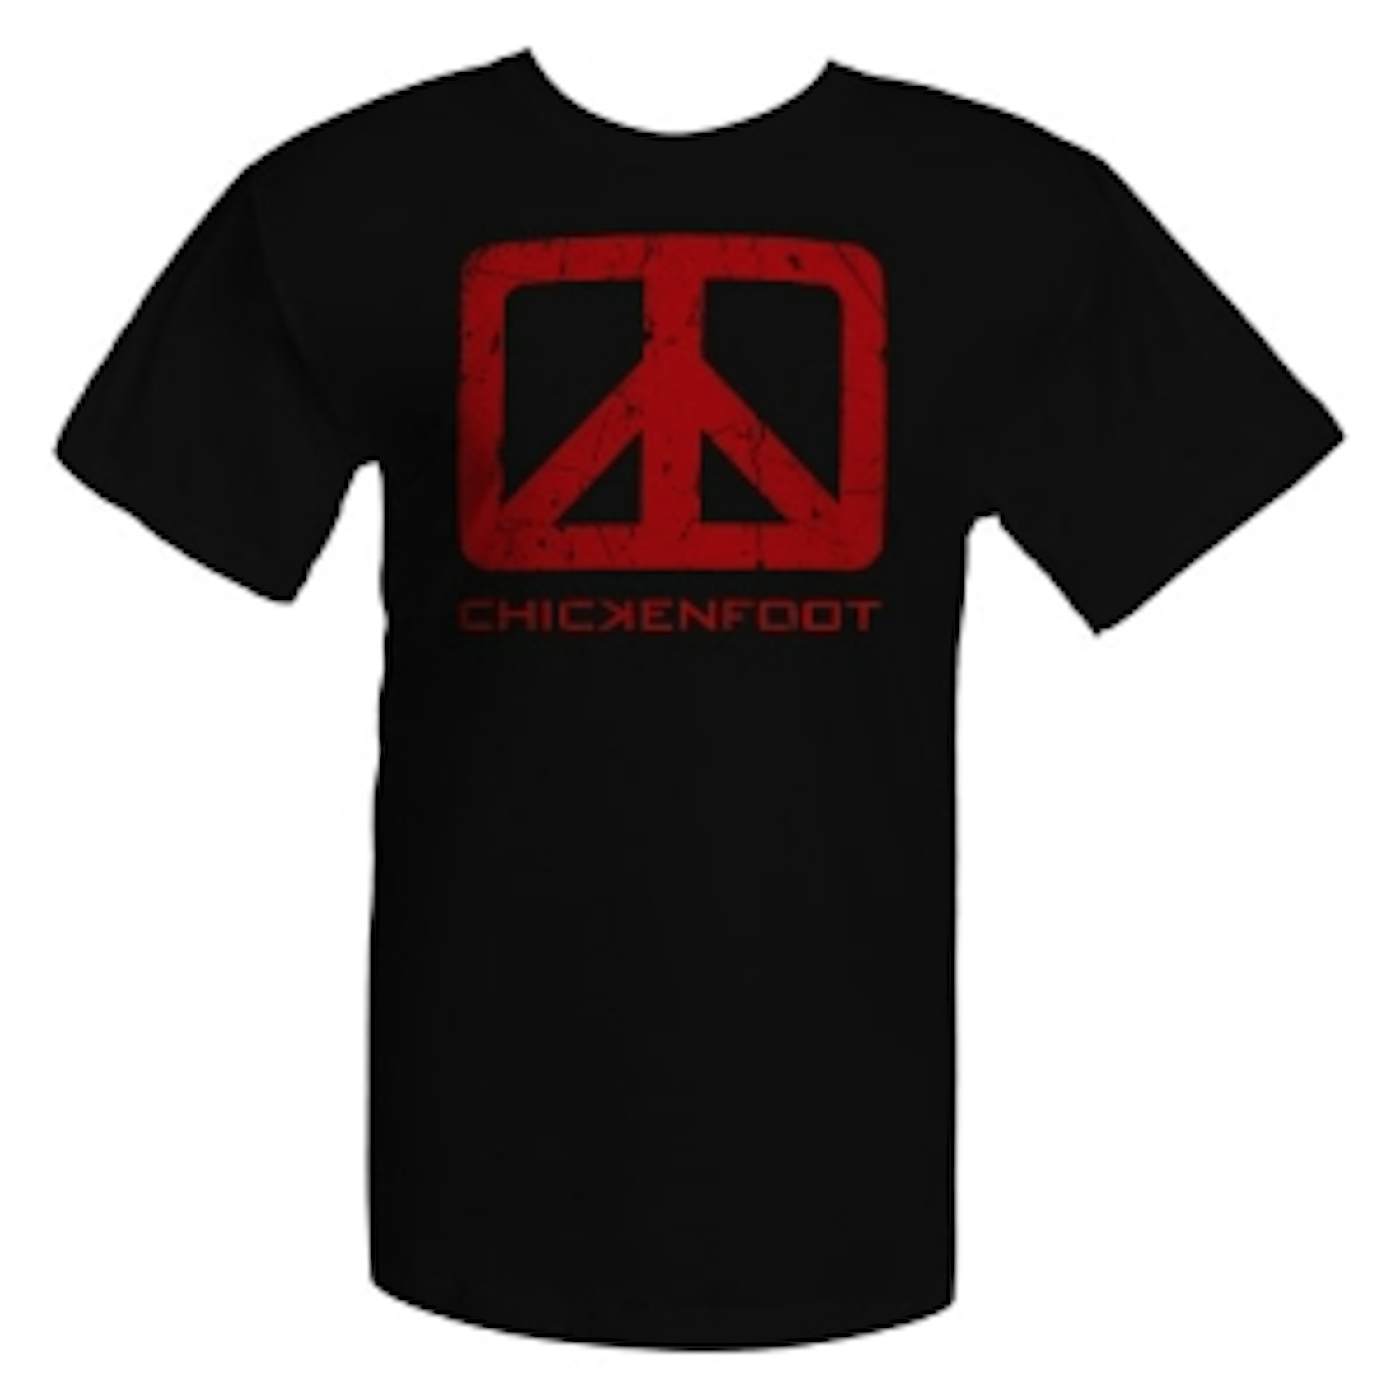 Chickenfoot Black Tee w/Red Logo Art